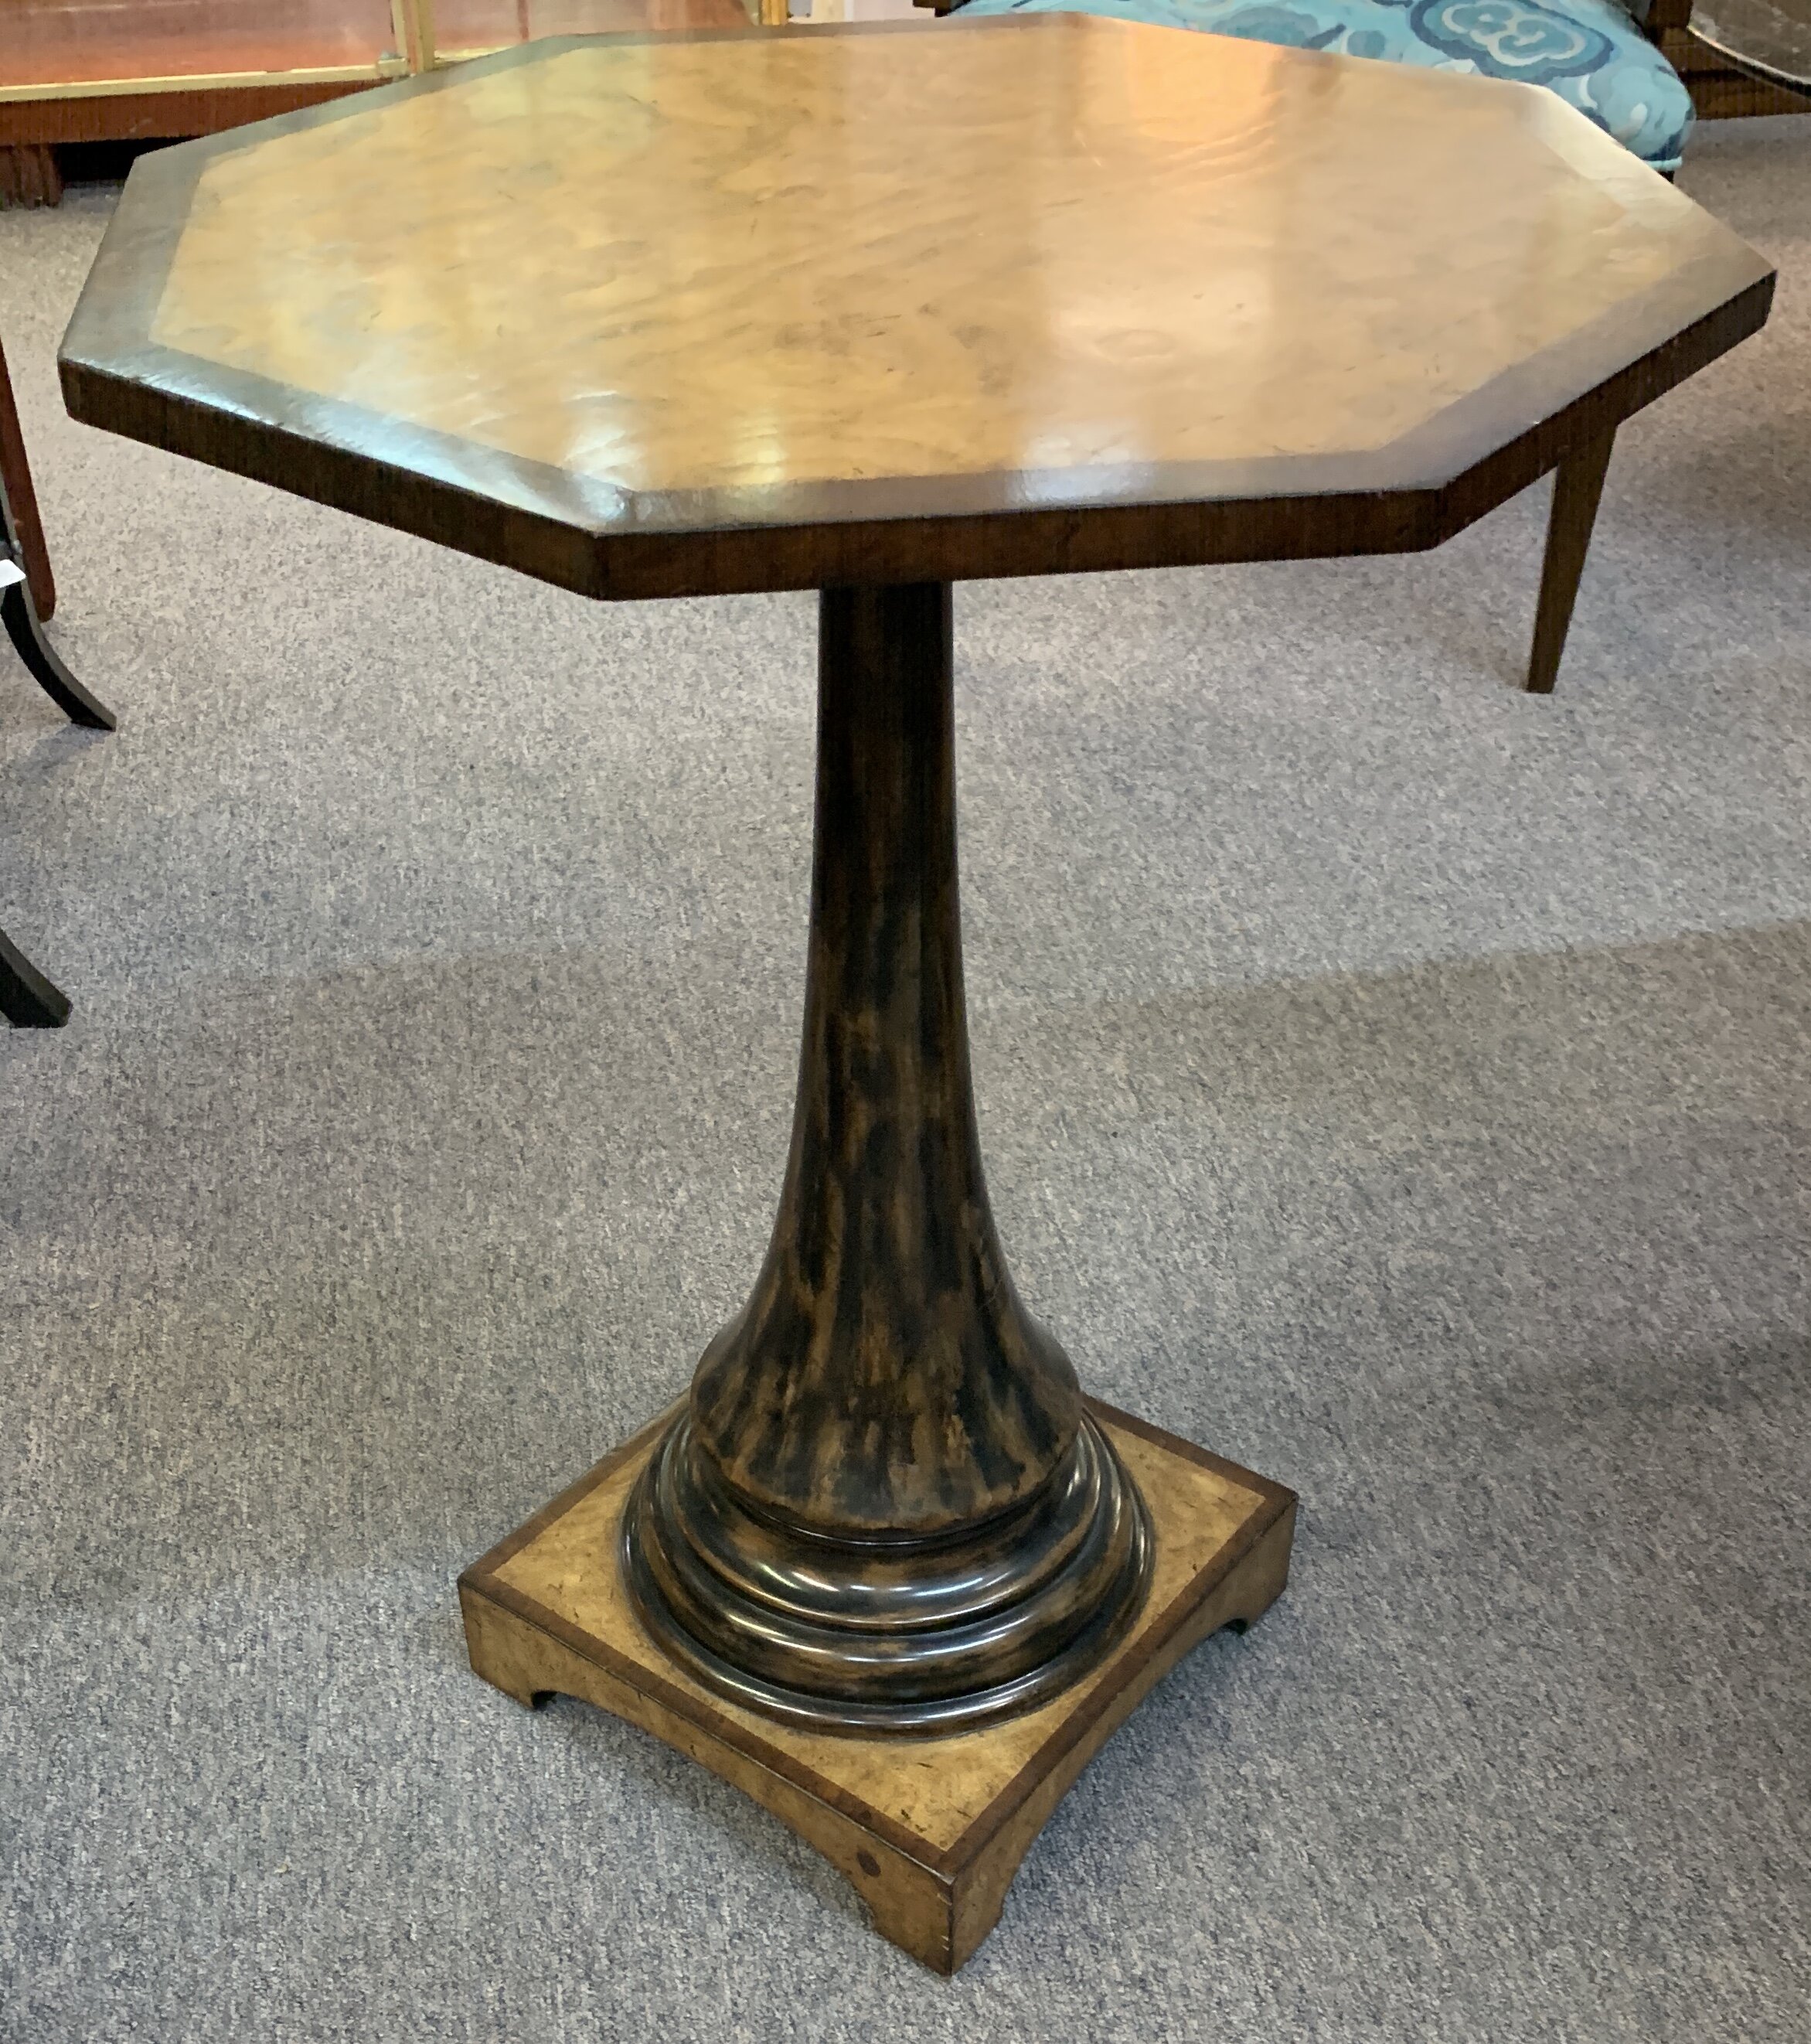 Octagonal Pedestal Table - $200